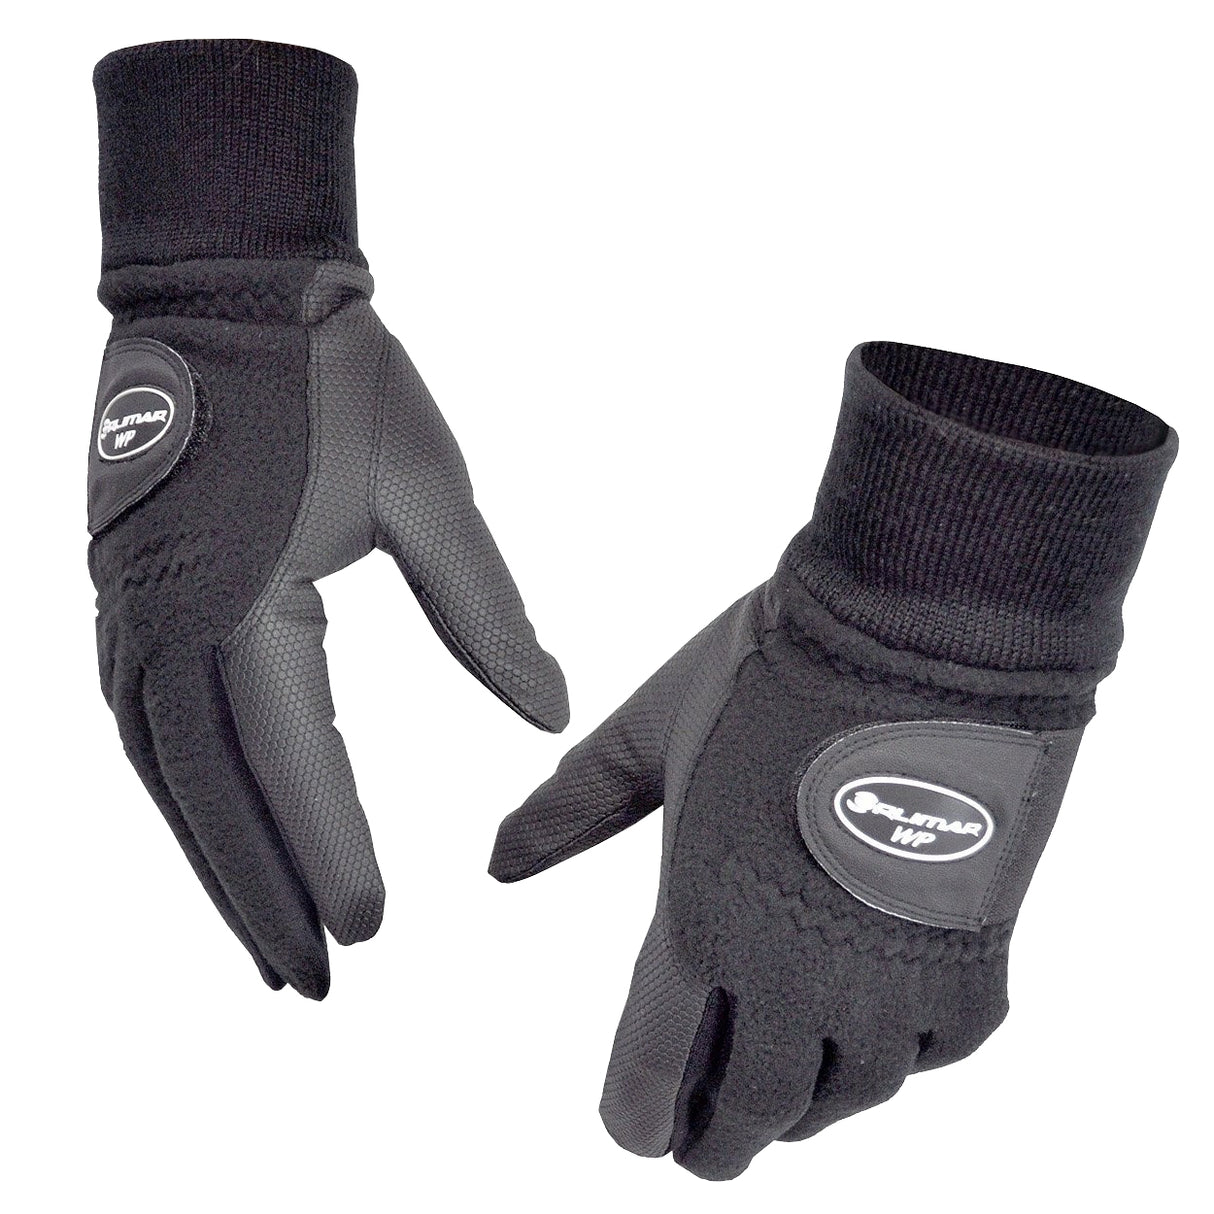 Orlimar Women's Cold Weather Performance Golf Gloves (1 Pair)